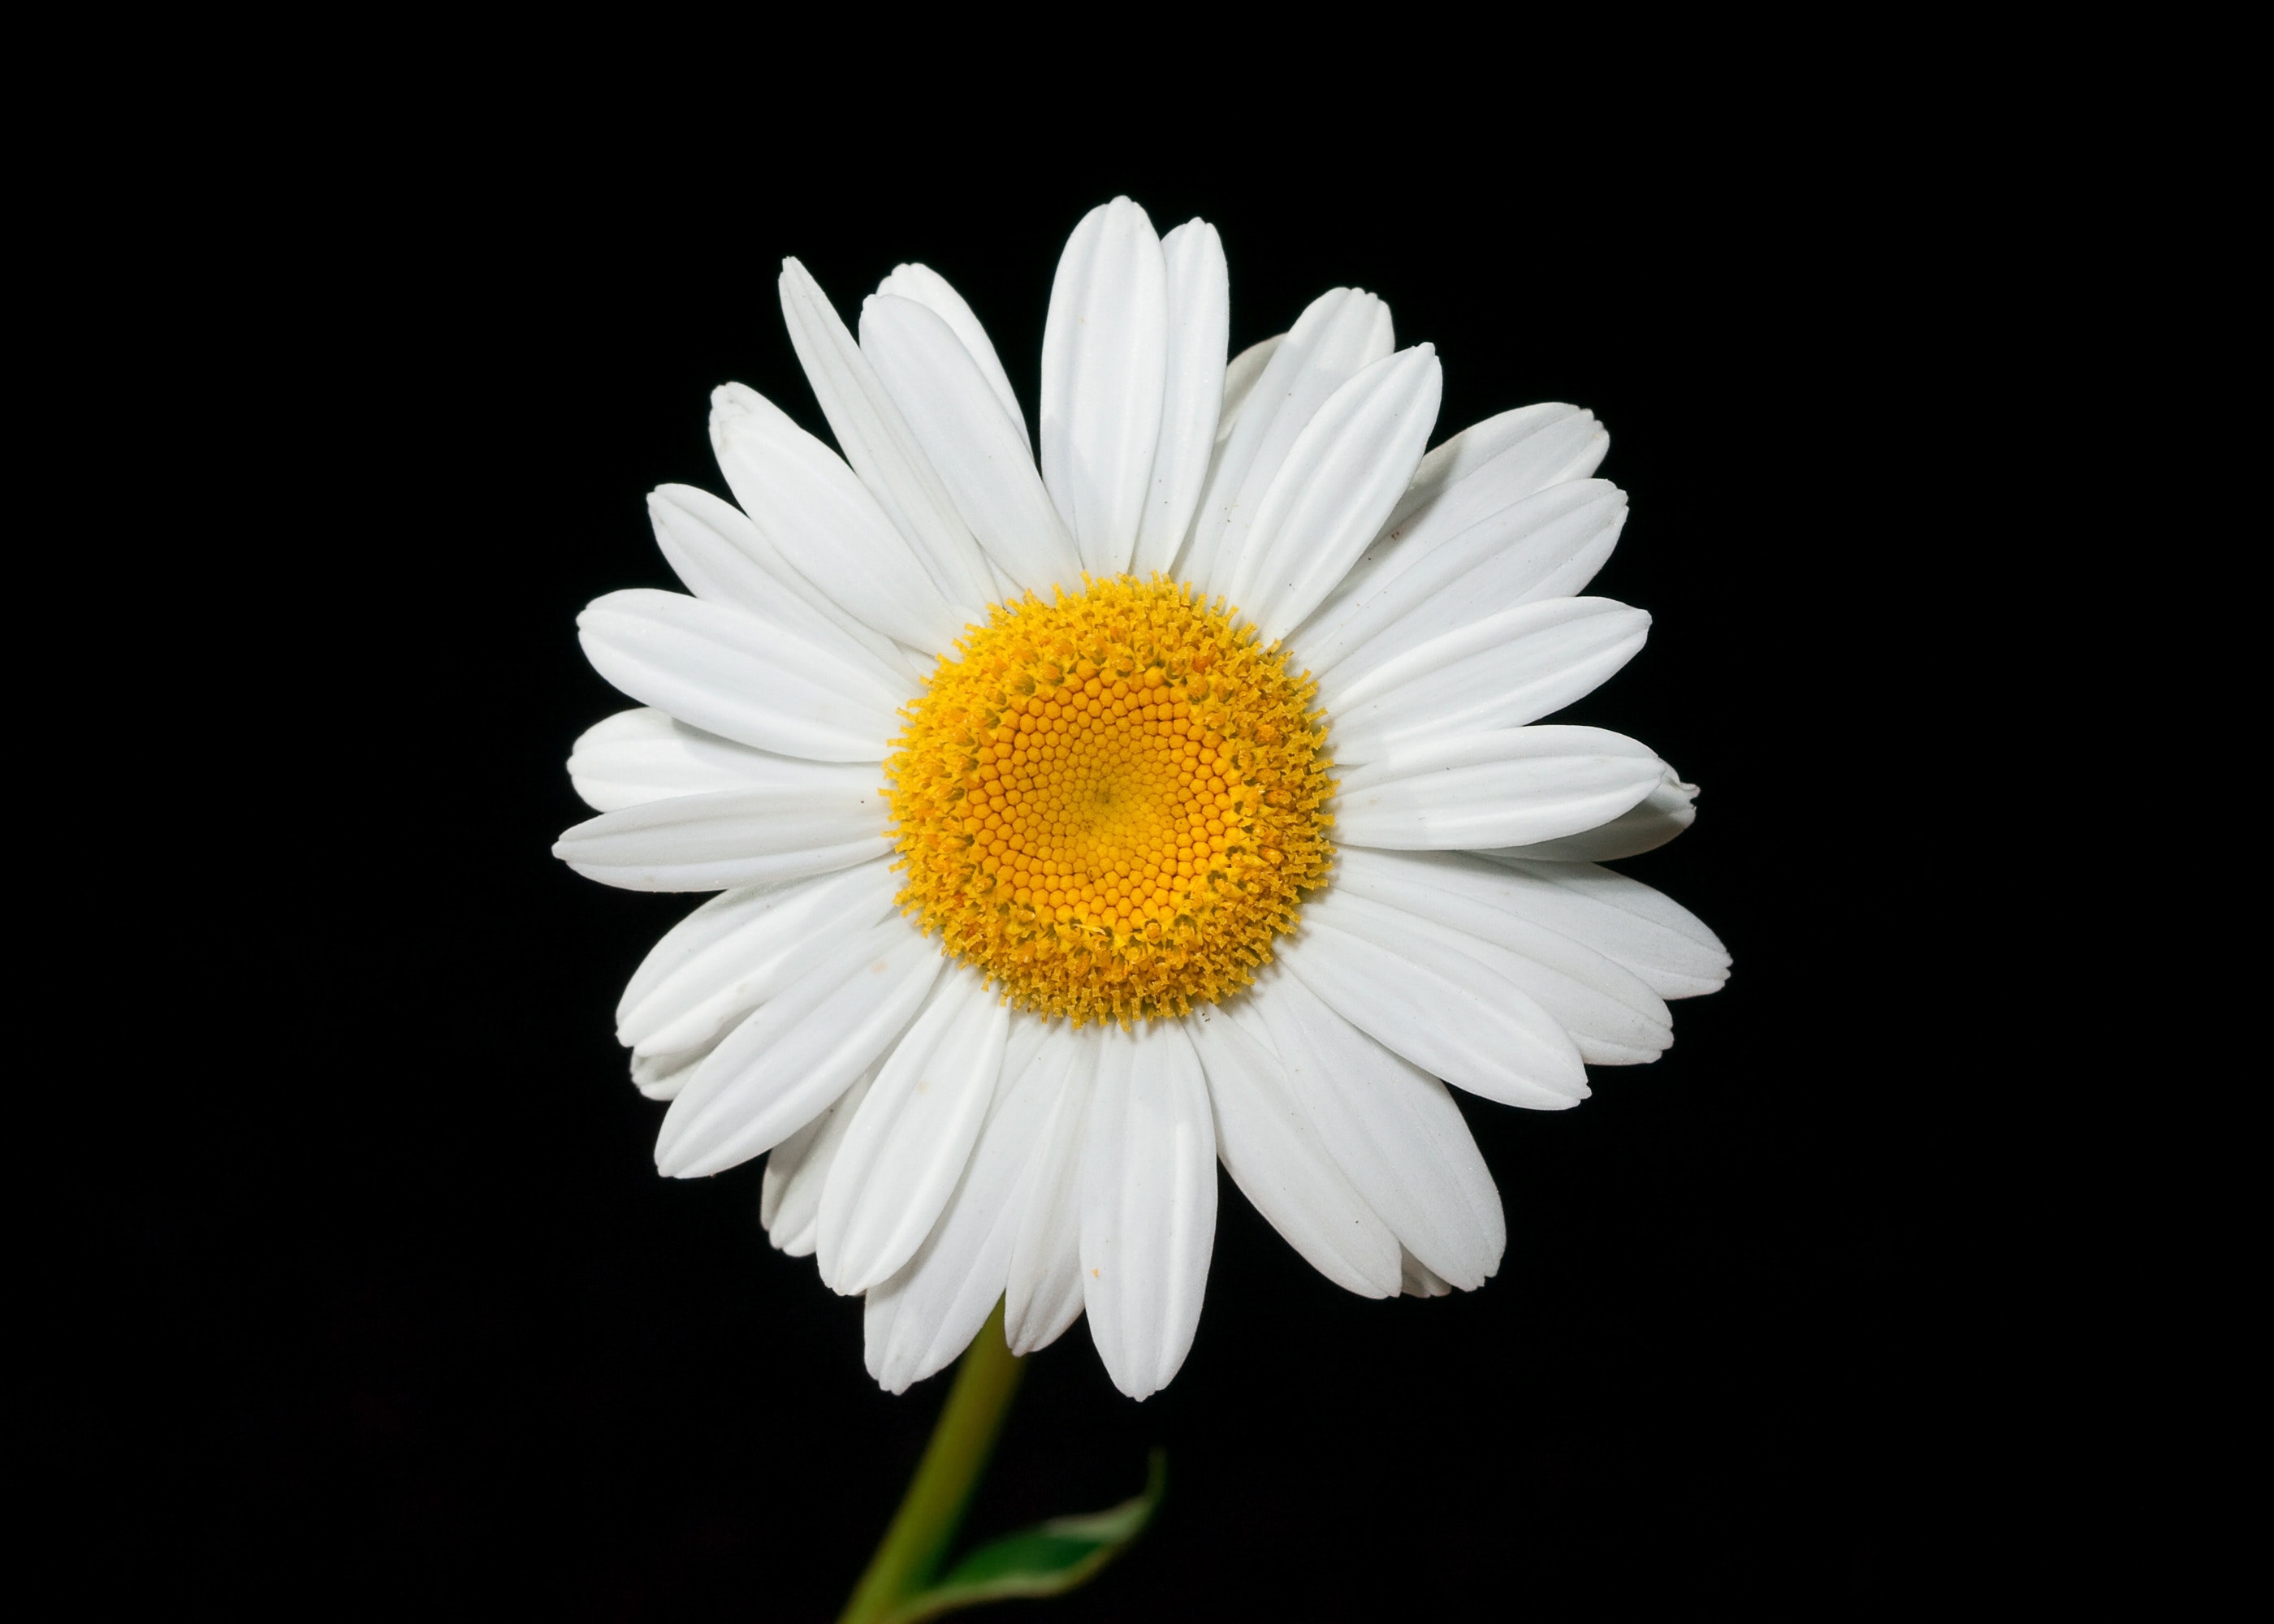 Macro Photography of White Flower · Free Stock Photo